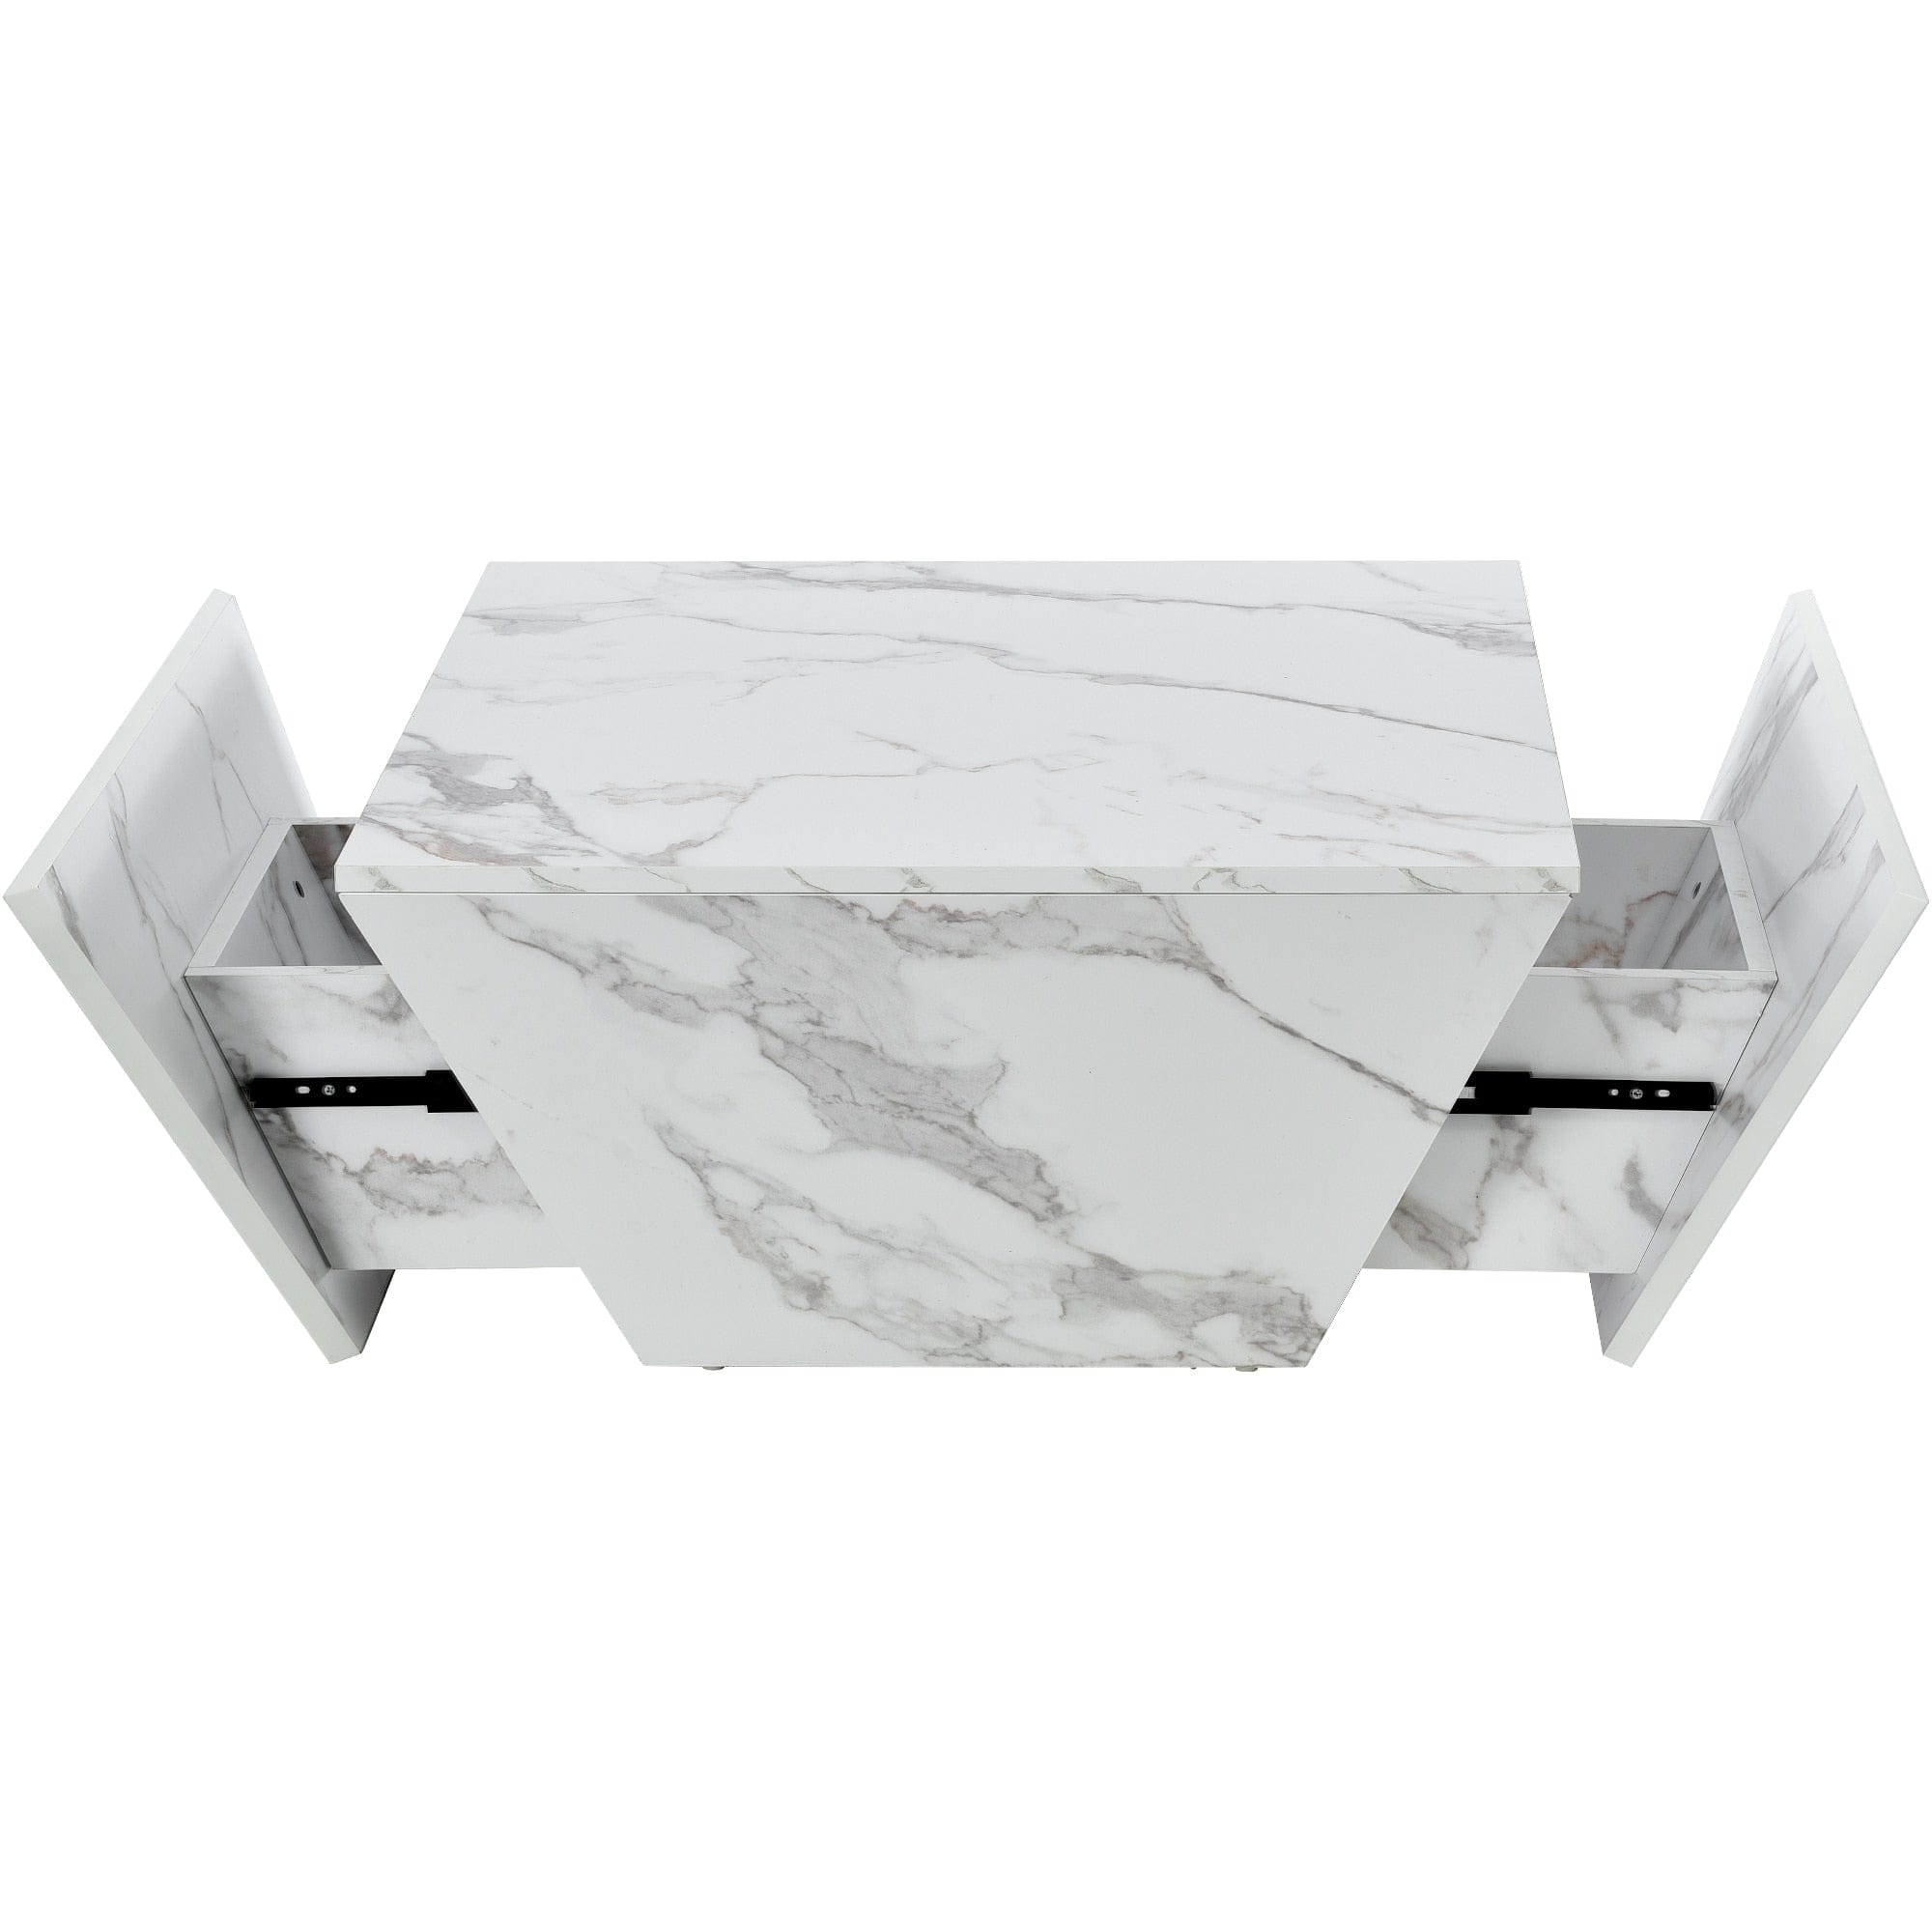 Table basse imitation marbre